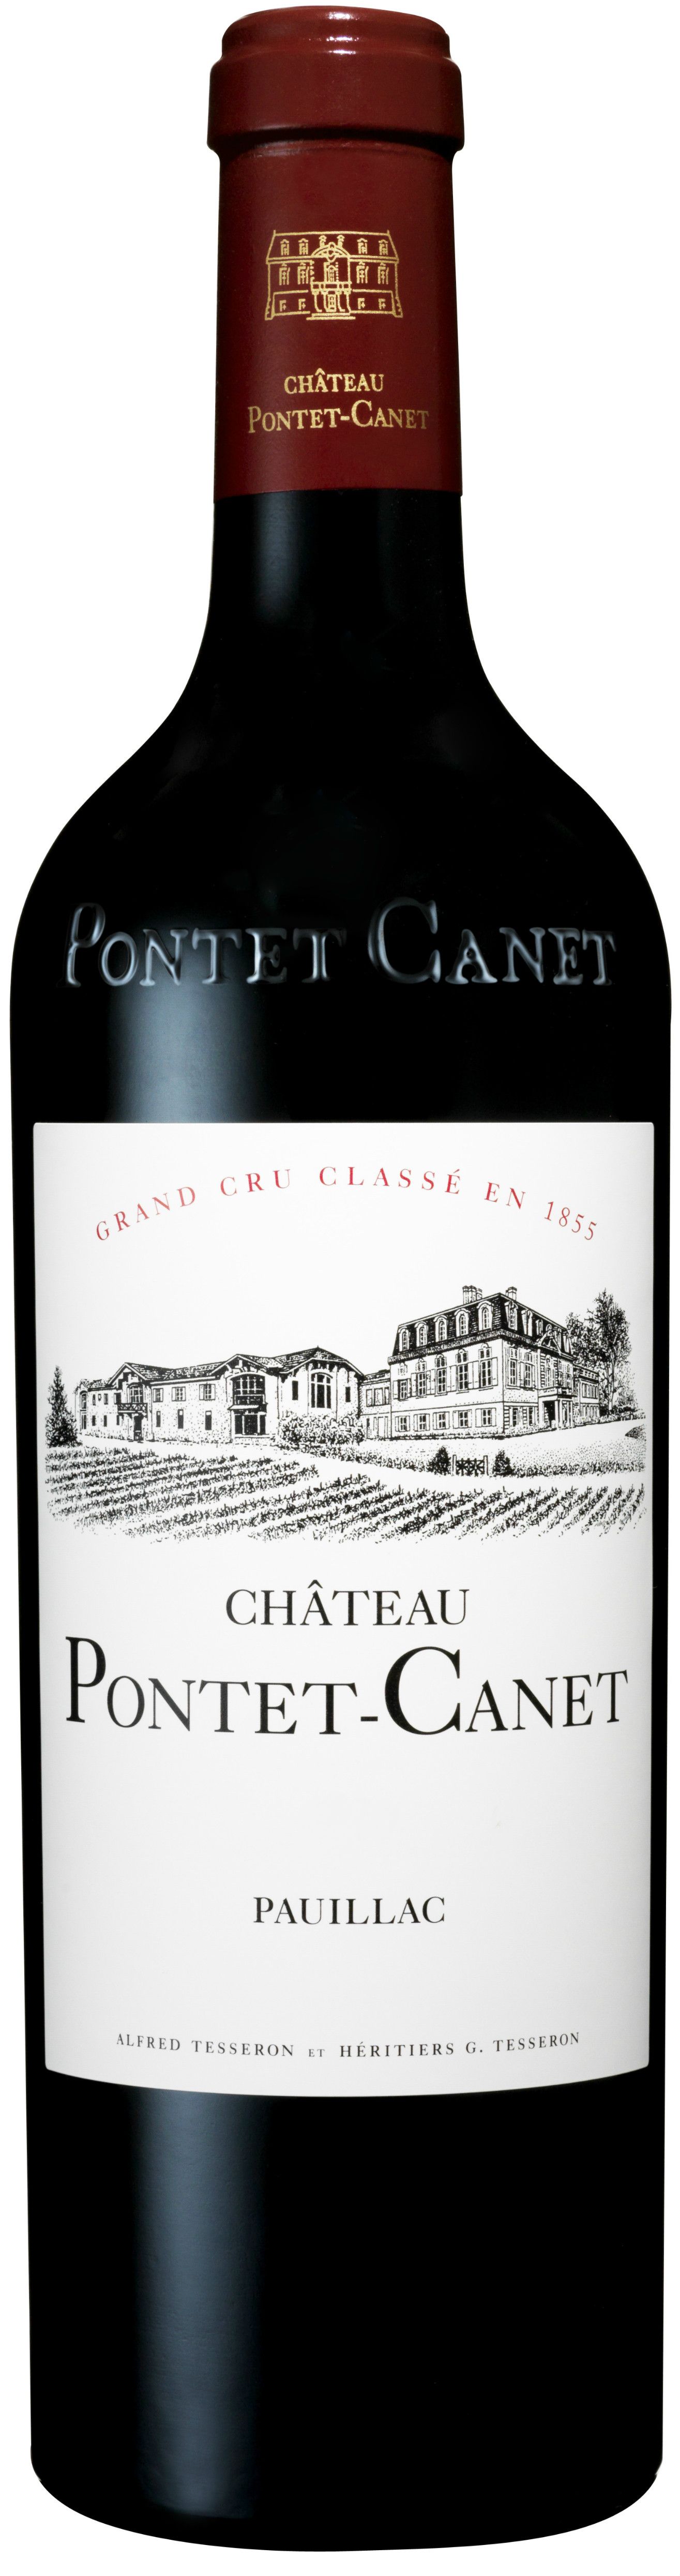 Chateau Pontet-Canet, 2009 (In 6-btls Box Set)